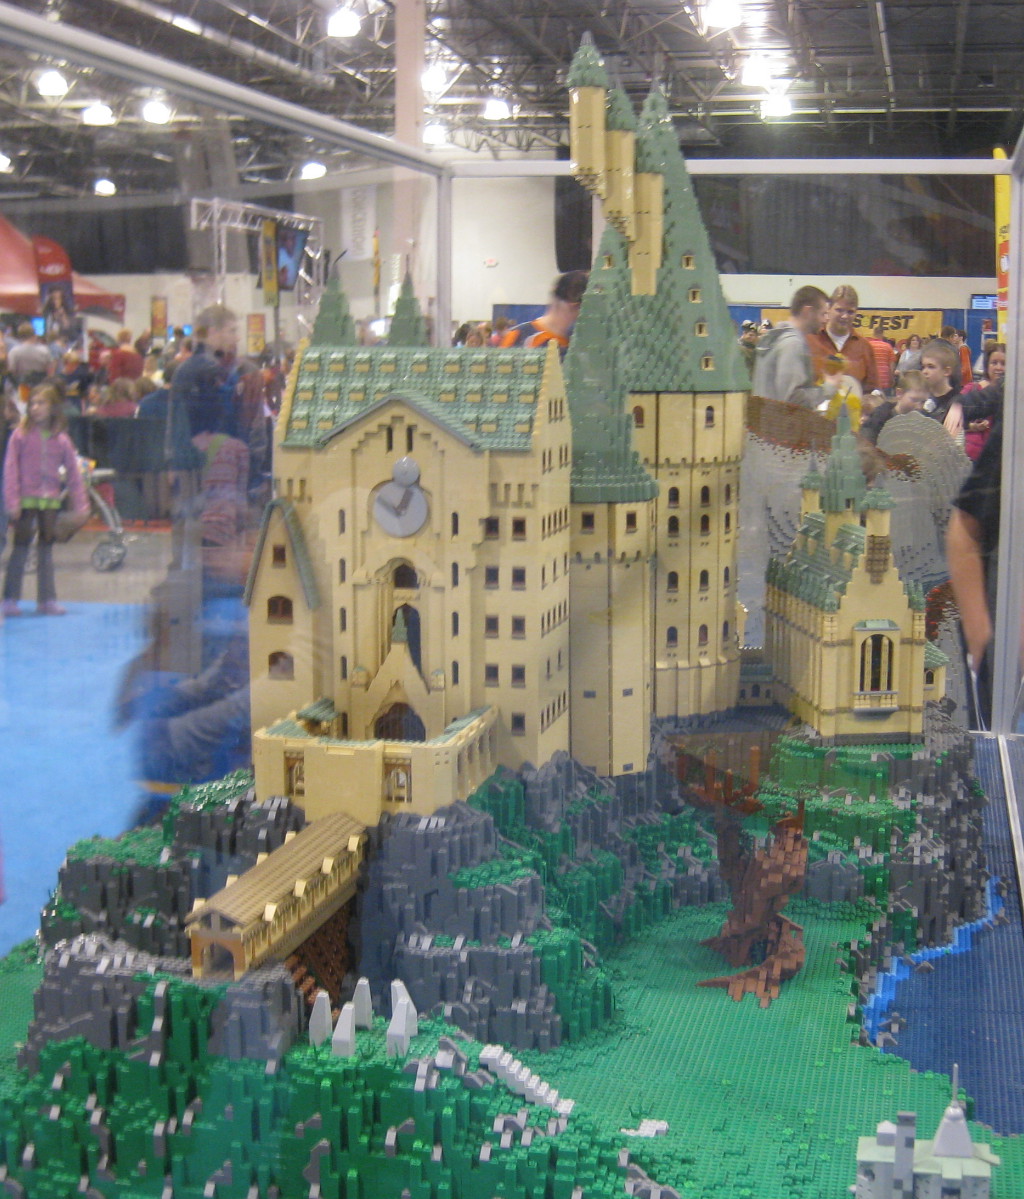 Hogwarts display at the Lego Kids Fest